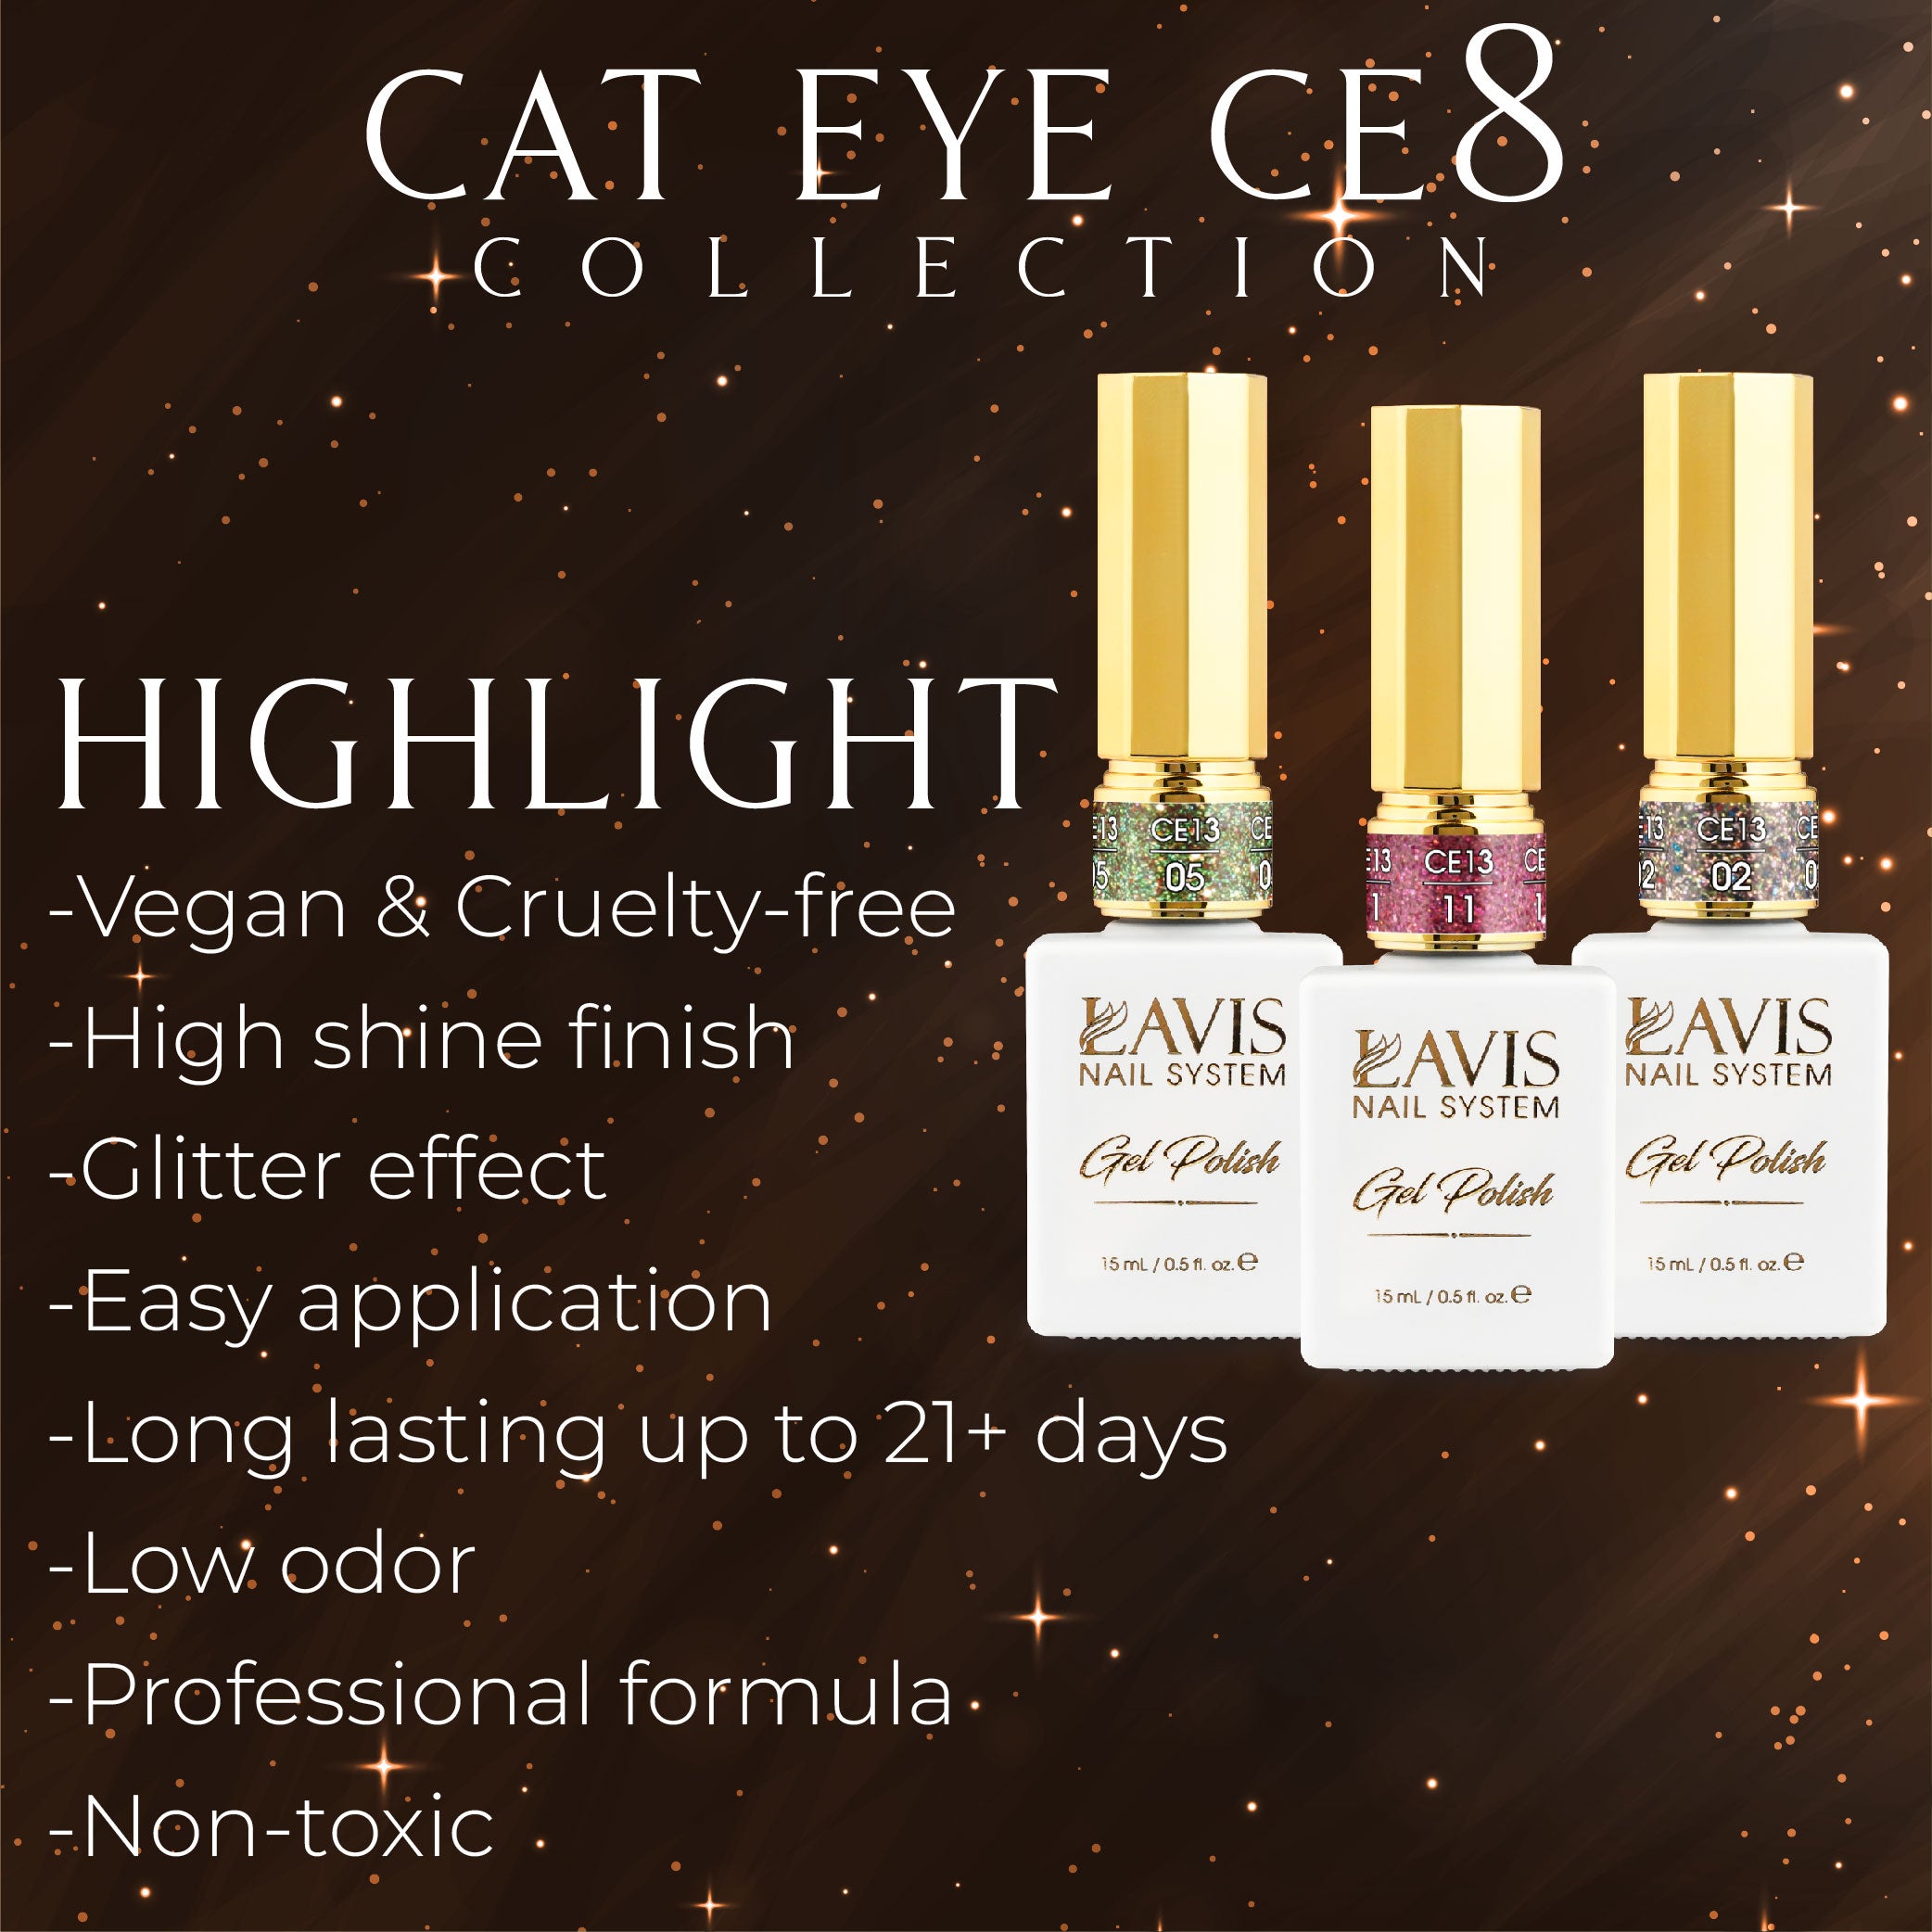 LAVIS Cat Eyes CE8 - 08 - Gel Polish 0.5 oz - Lavis Hidden Treasures Collection